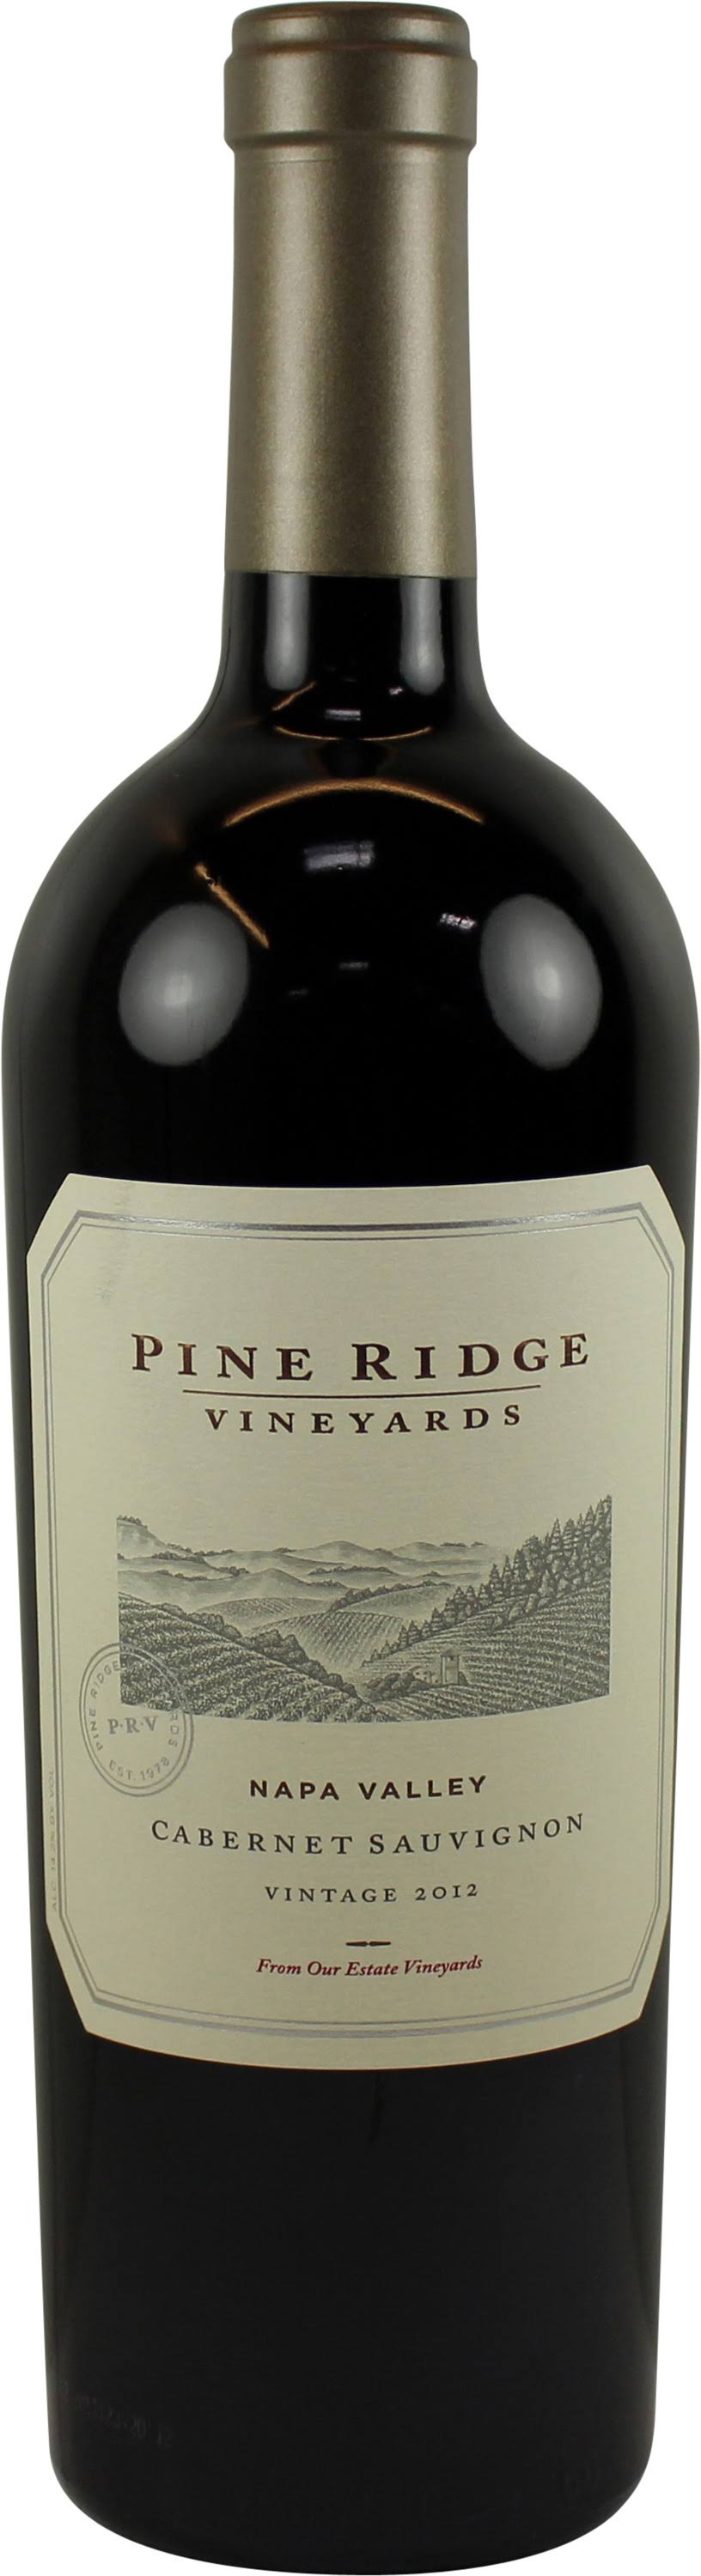 Pine Ridge Cabernet Sauvignon, Napa Valley, 2016 - 750 ml